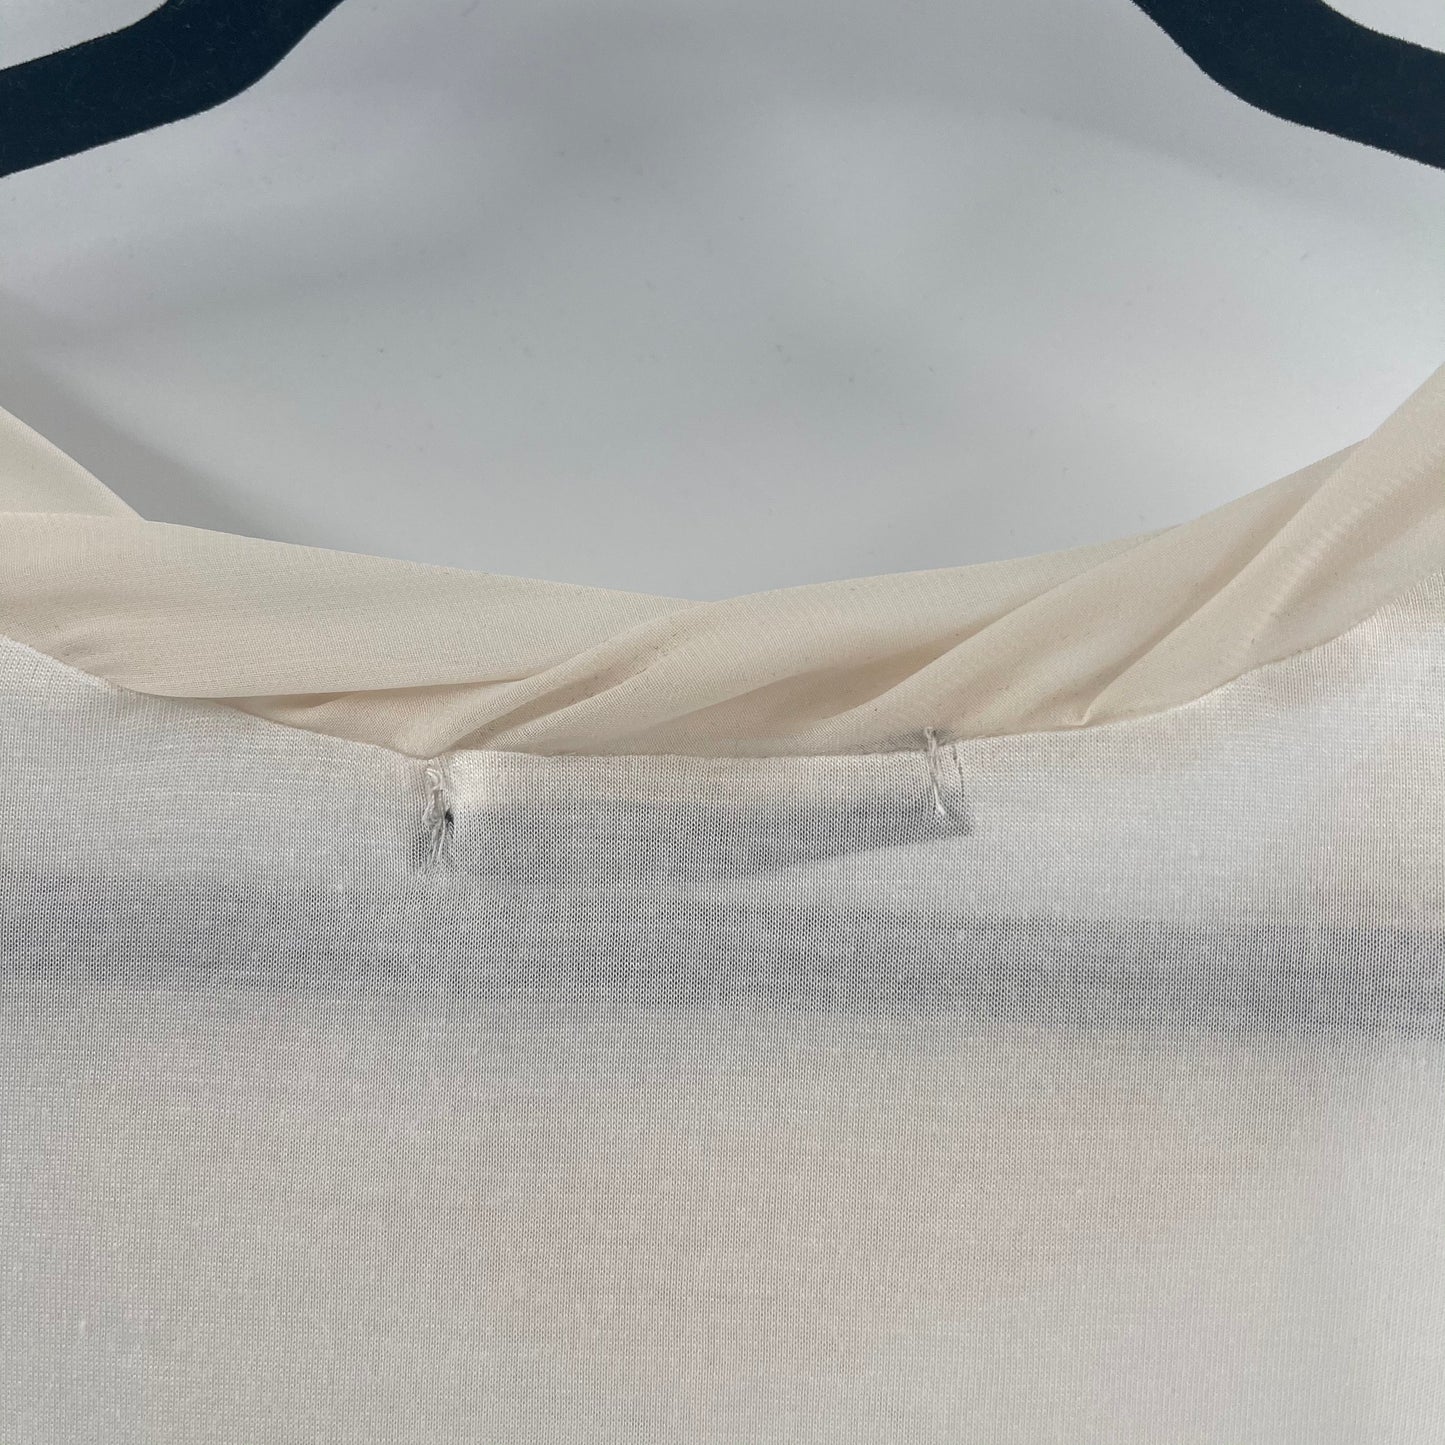 Anthropologie- Robust - Cream Short Sleeve Top With Organza Detail on Neckline (Size S)